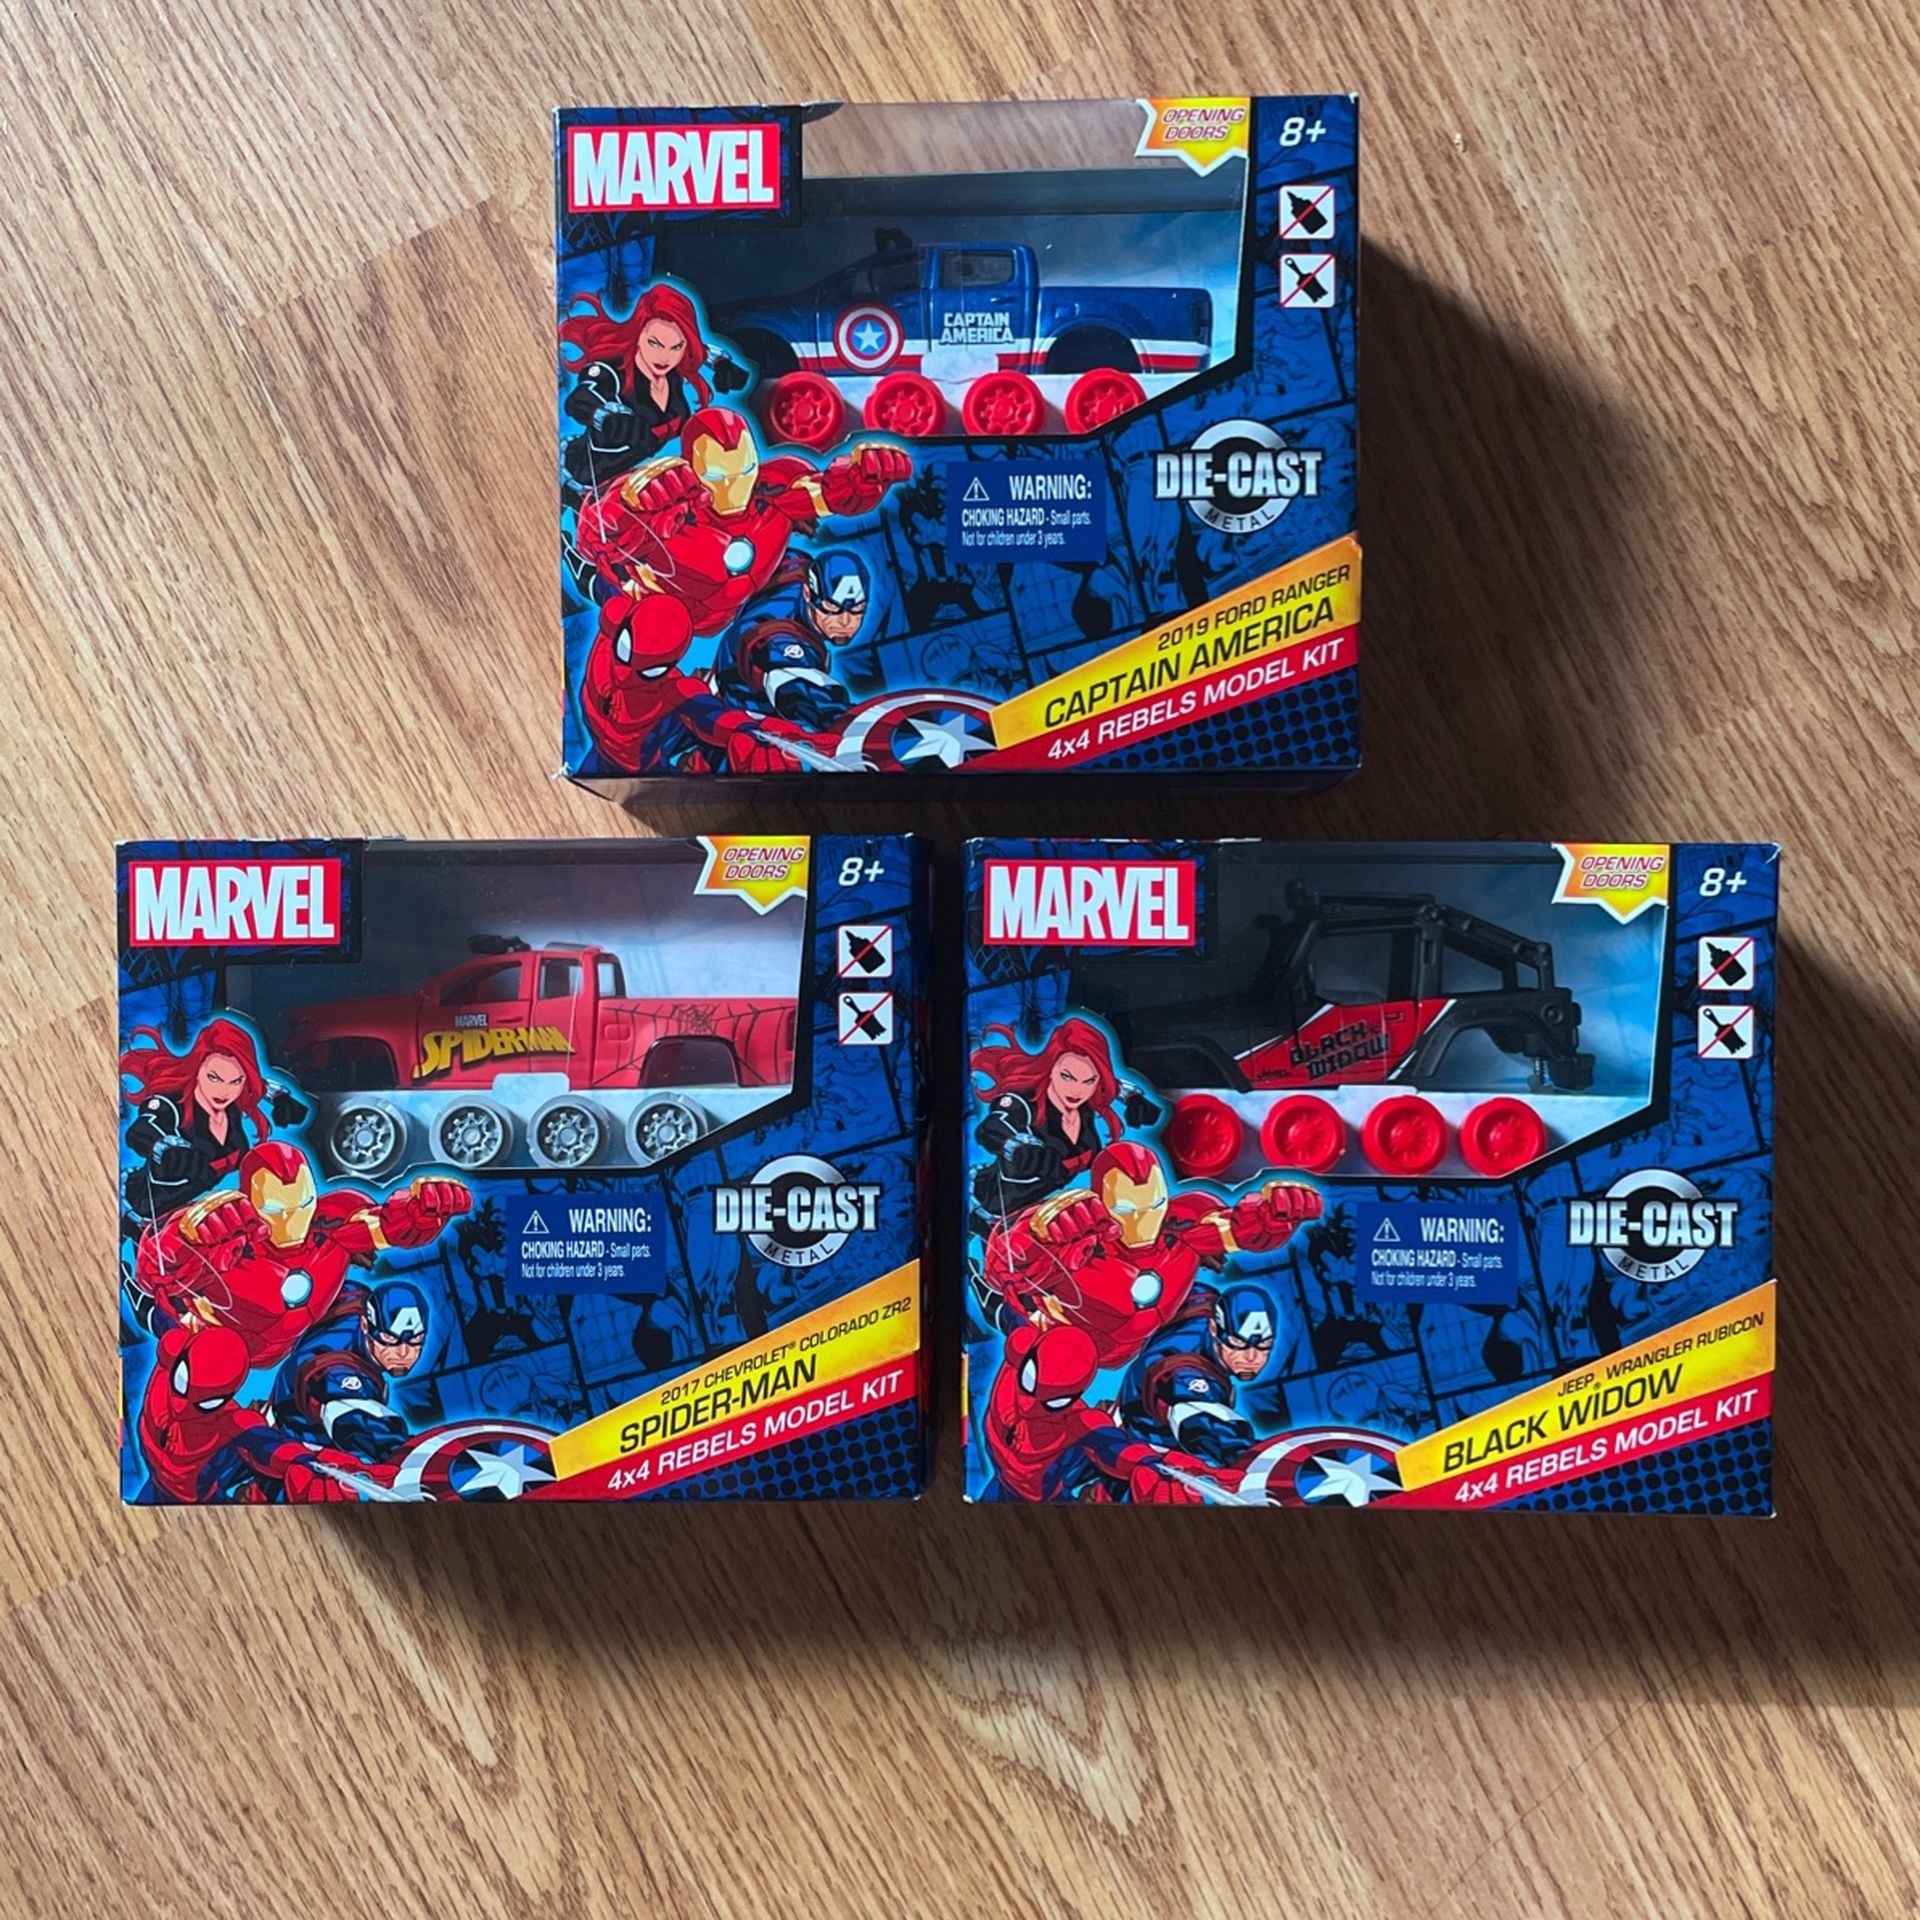 NEW Marvel Rebels Model Kits Bundle (captain America, Spider-Man, & Black Widow) $20